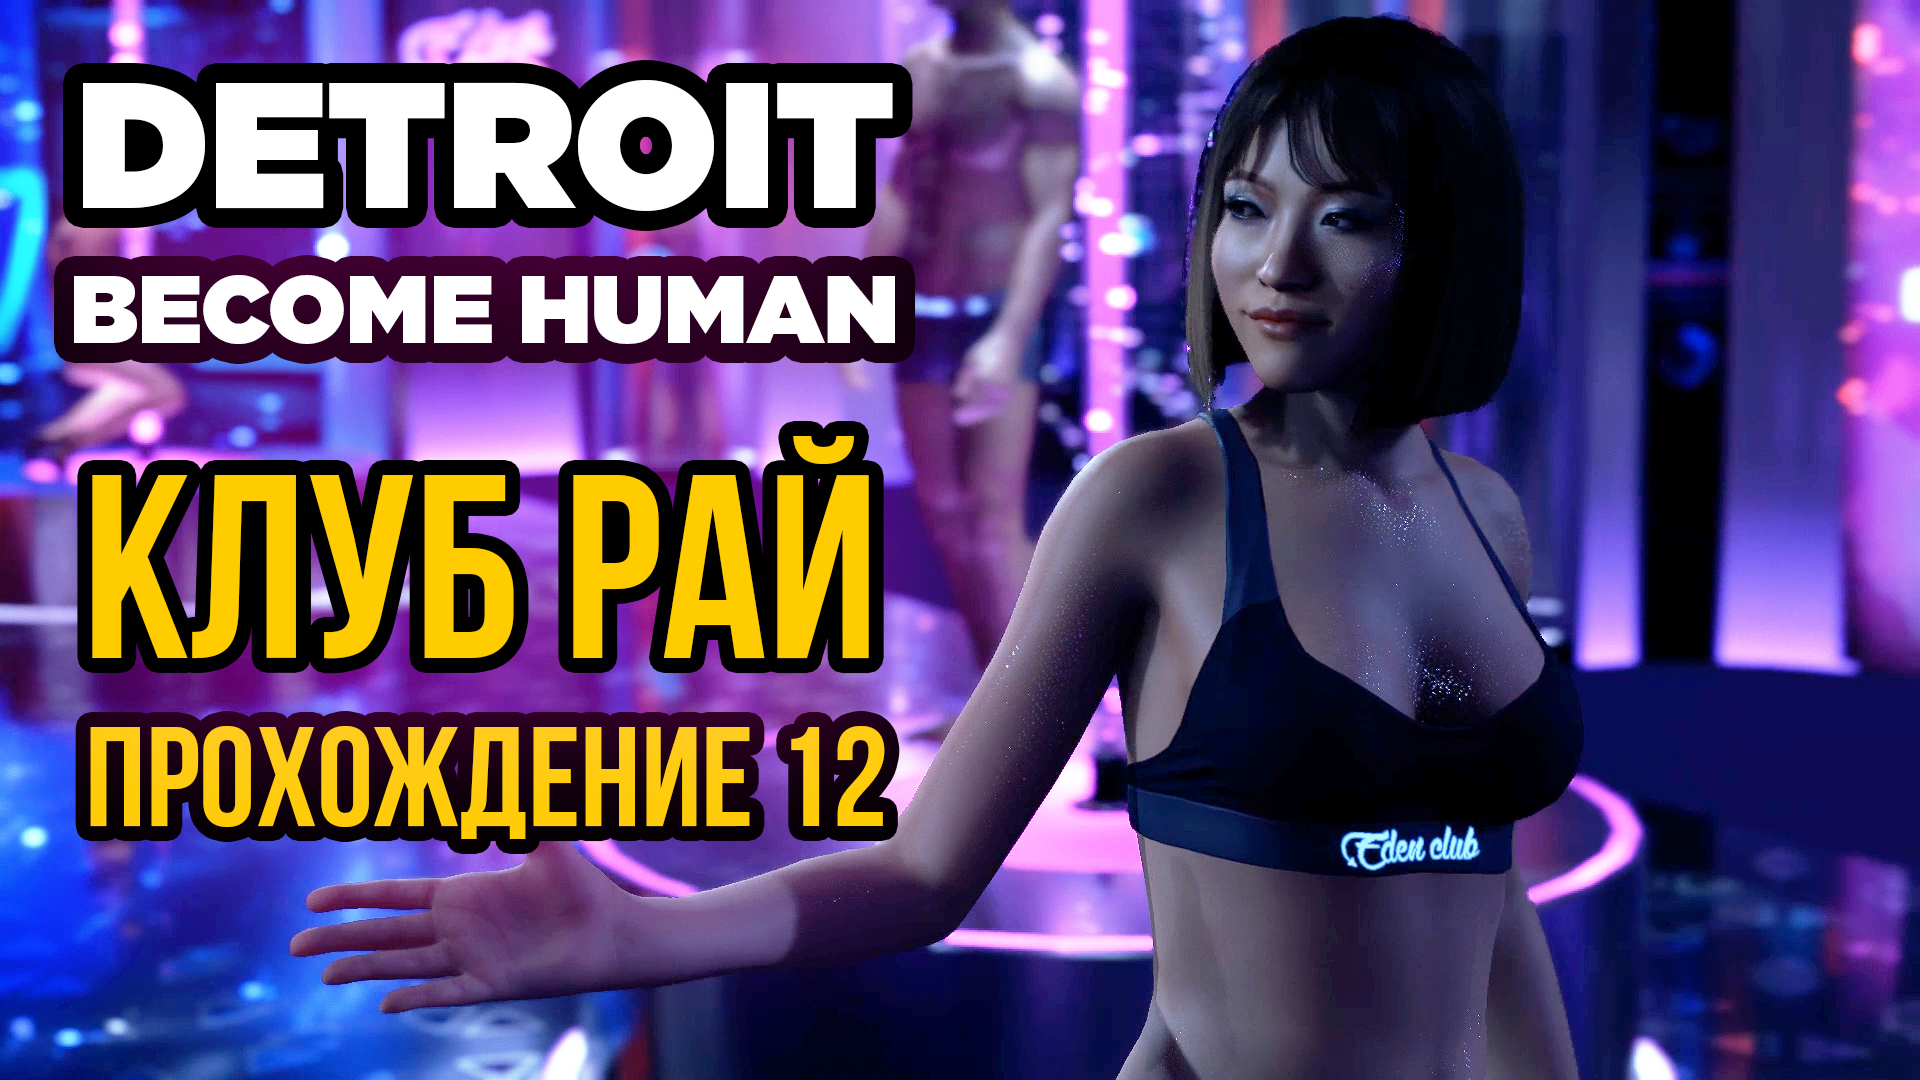 Detroit: Become Human - Клуб Рай. Прохождение 12